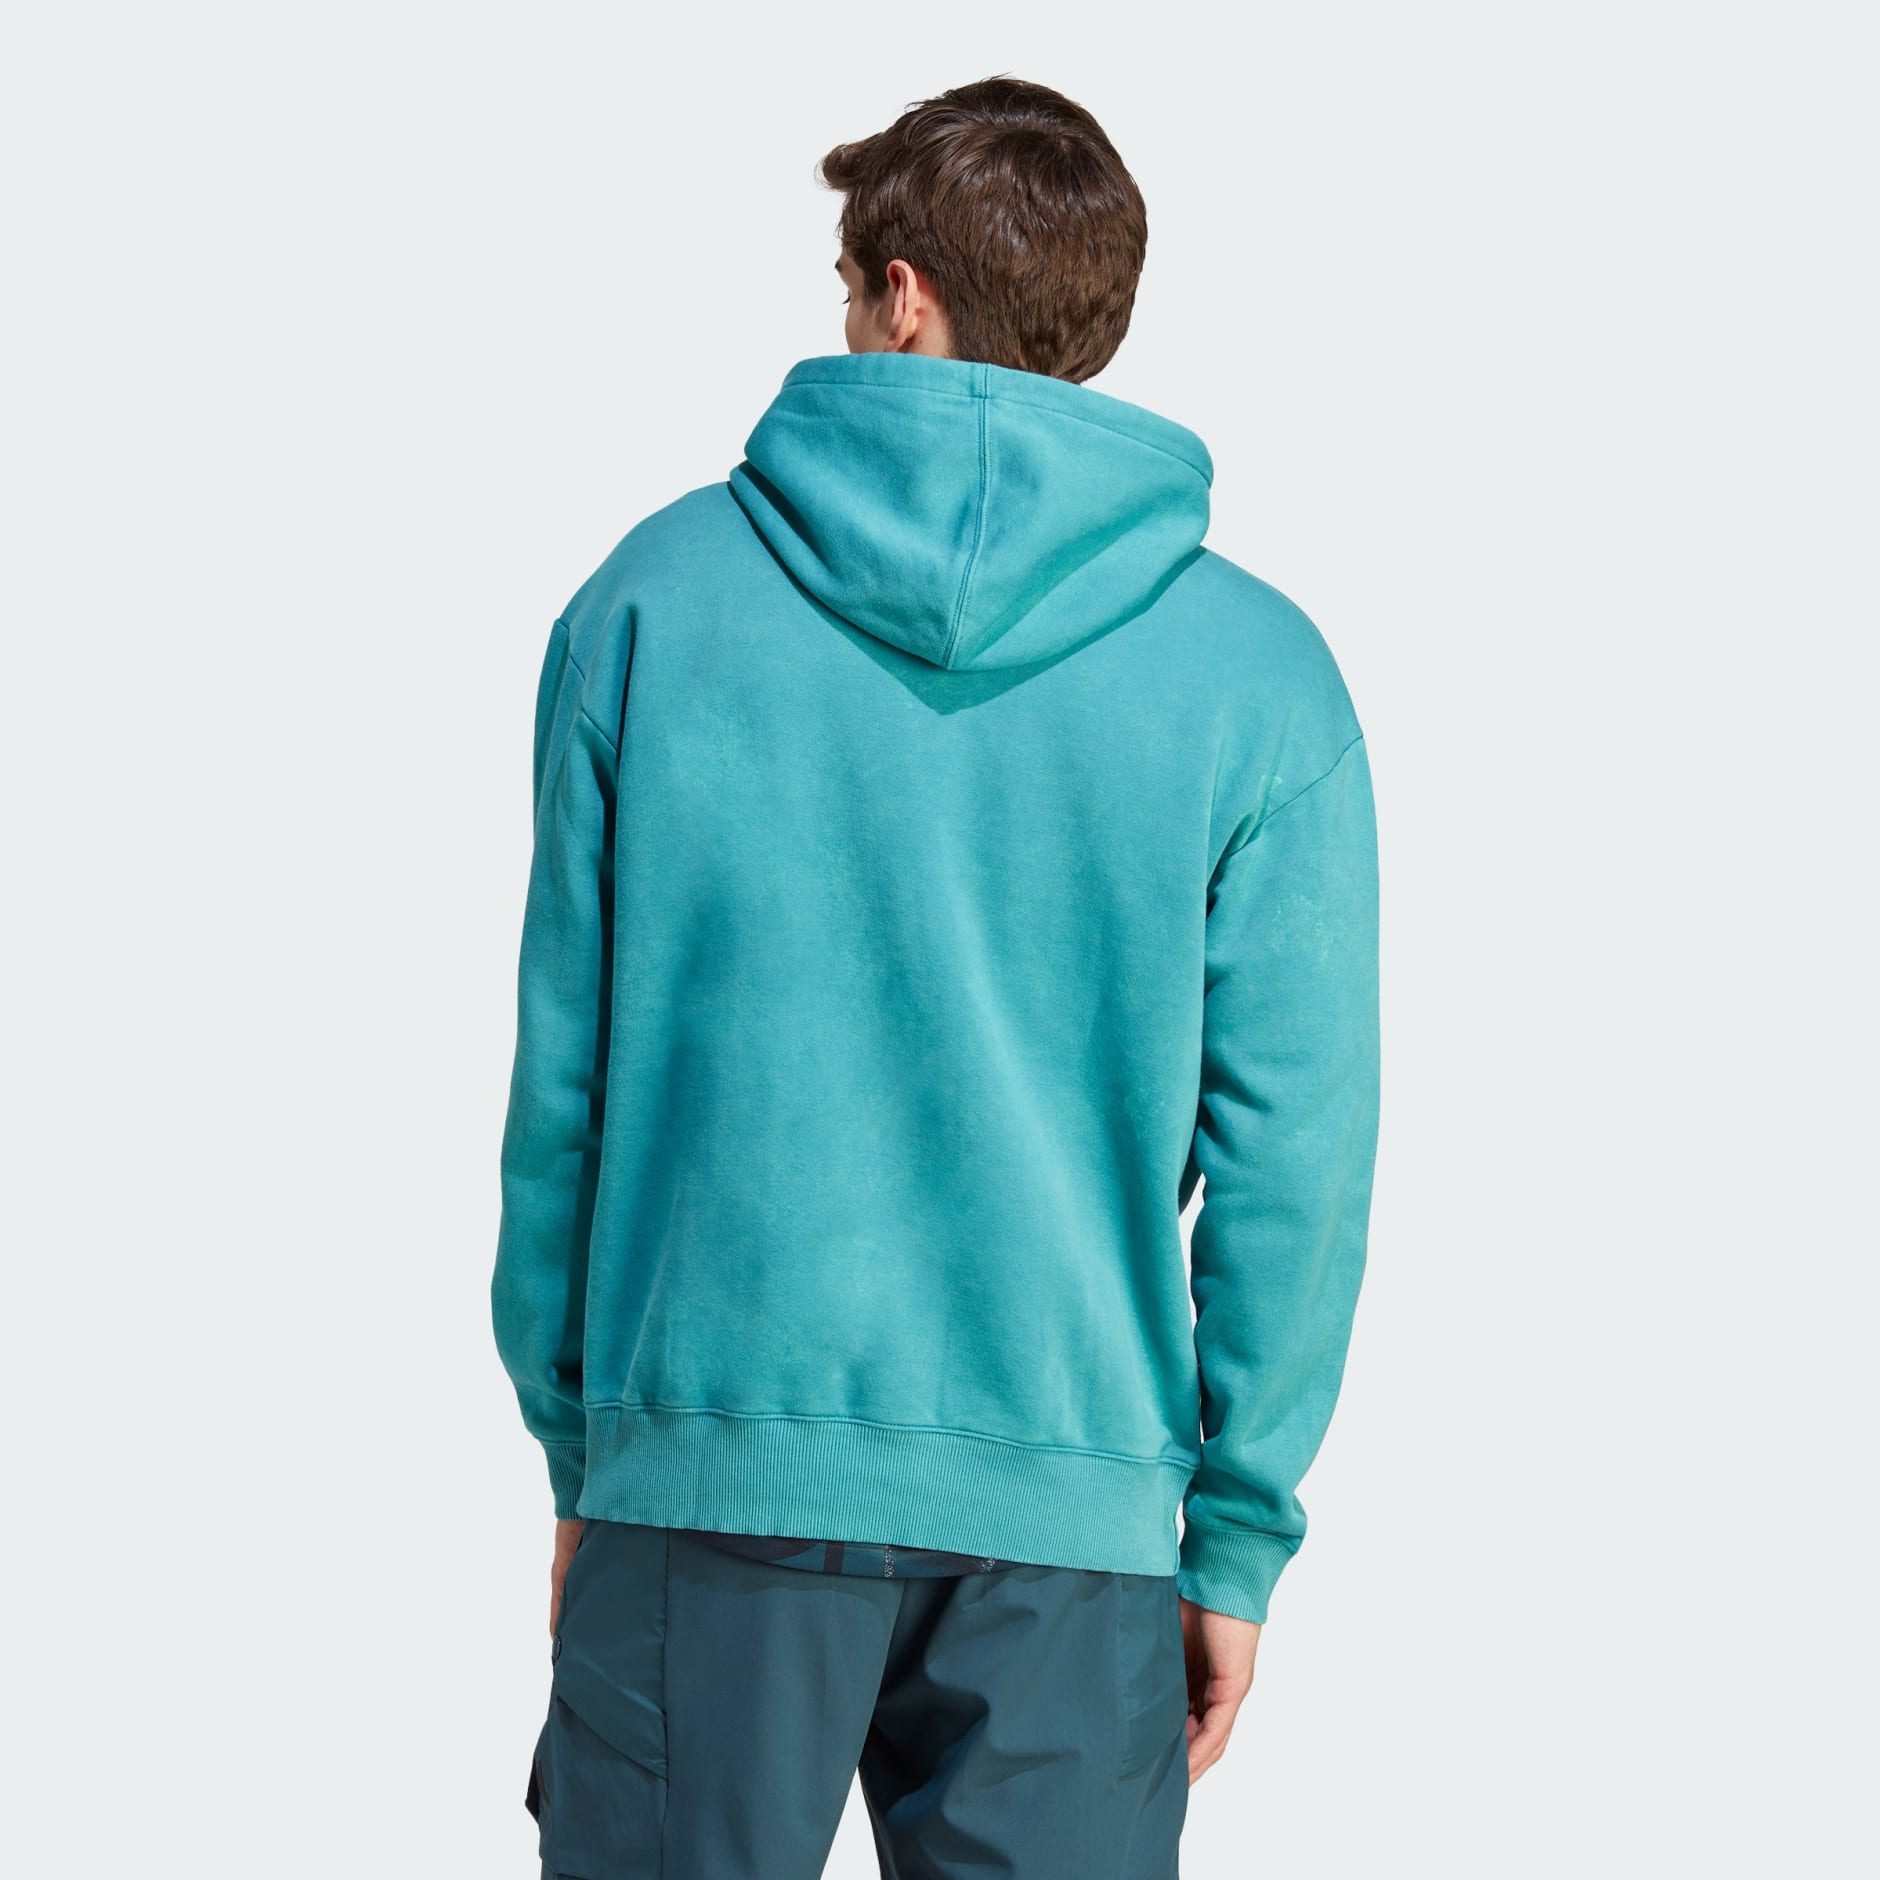 Adidas Originals Beach Hoodie Men's sz M Pulse Aqua Sonic Aqua hoodie